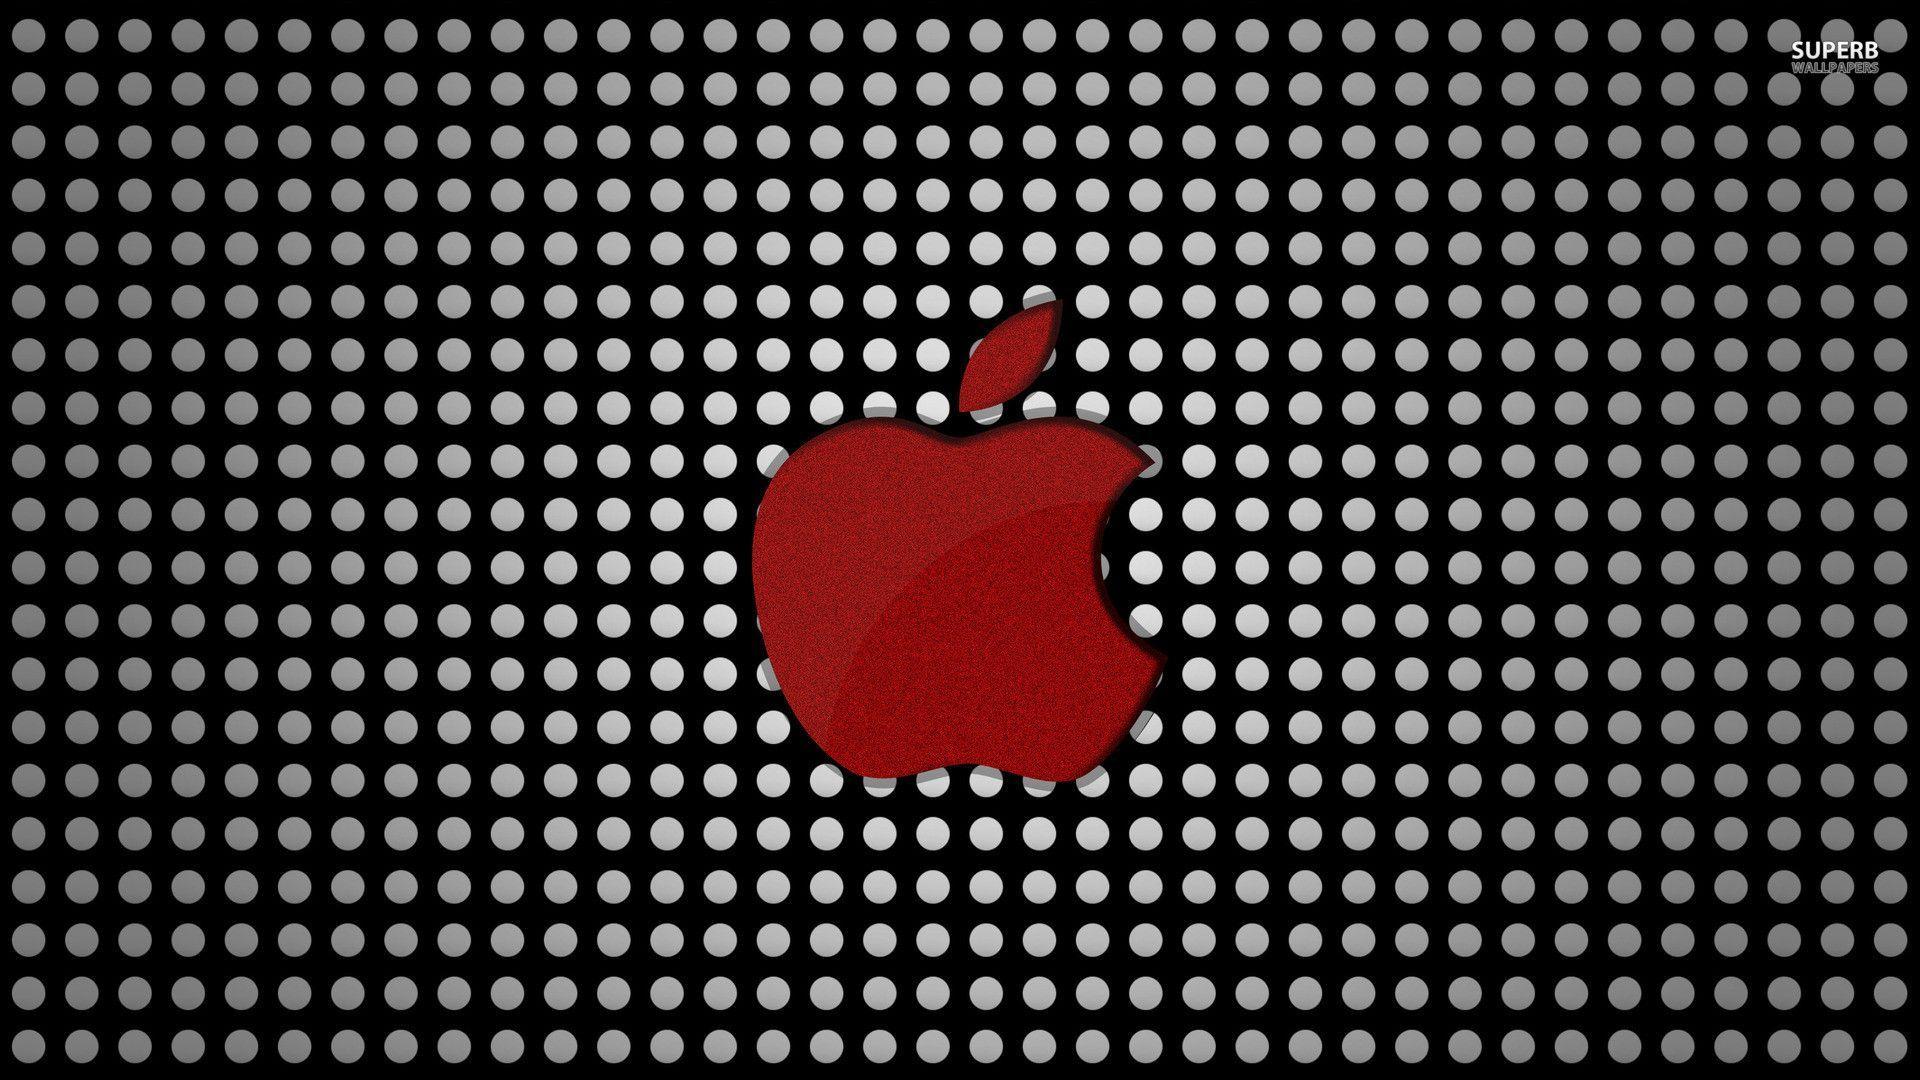 Red Apple logo on polka dots wallpaper wallpaper - #